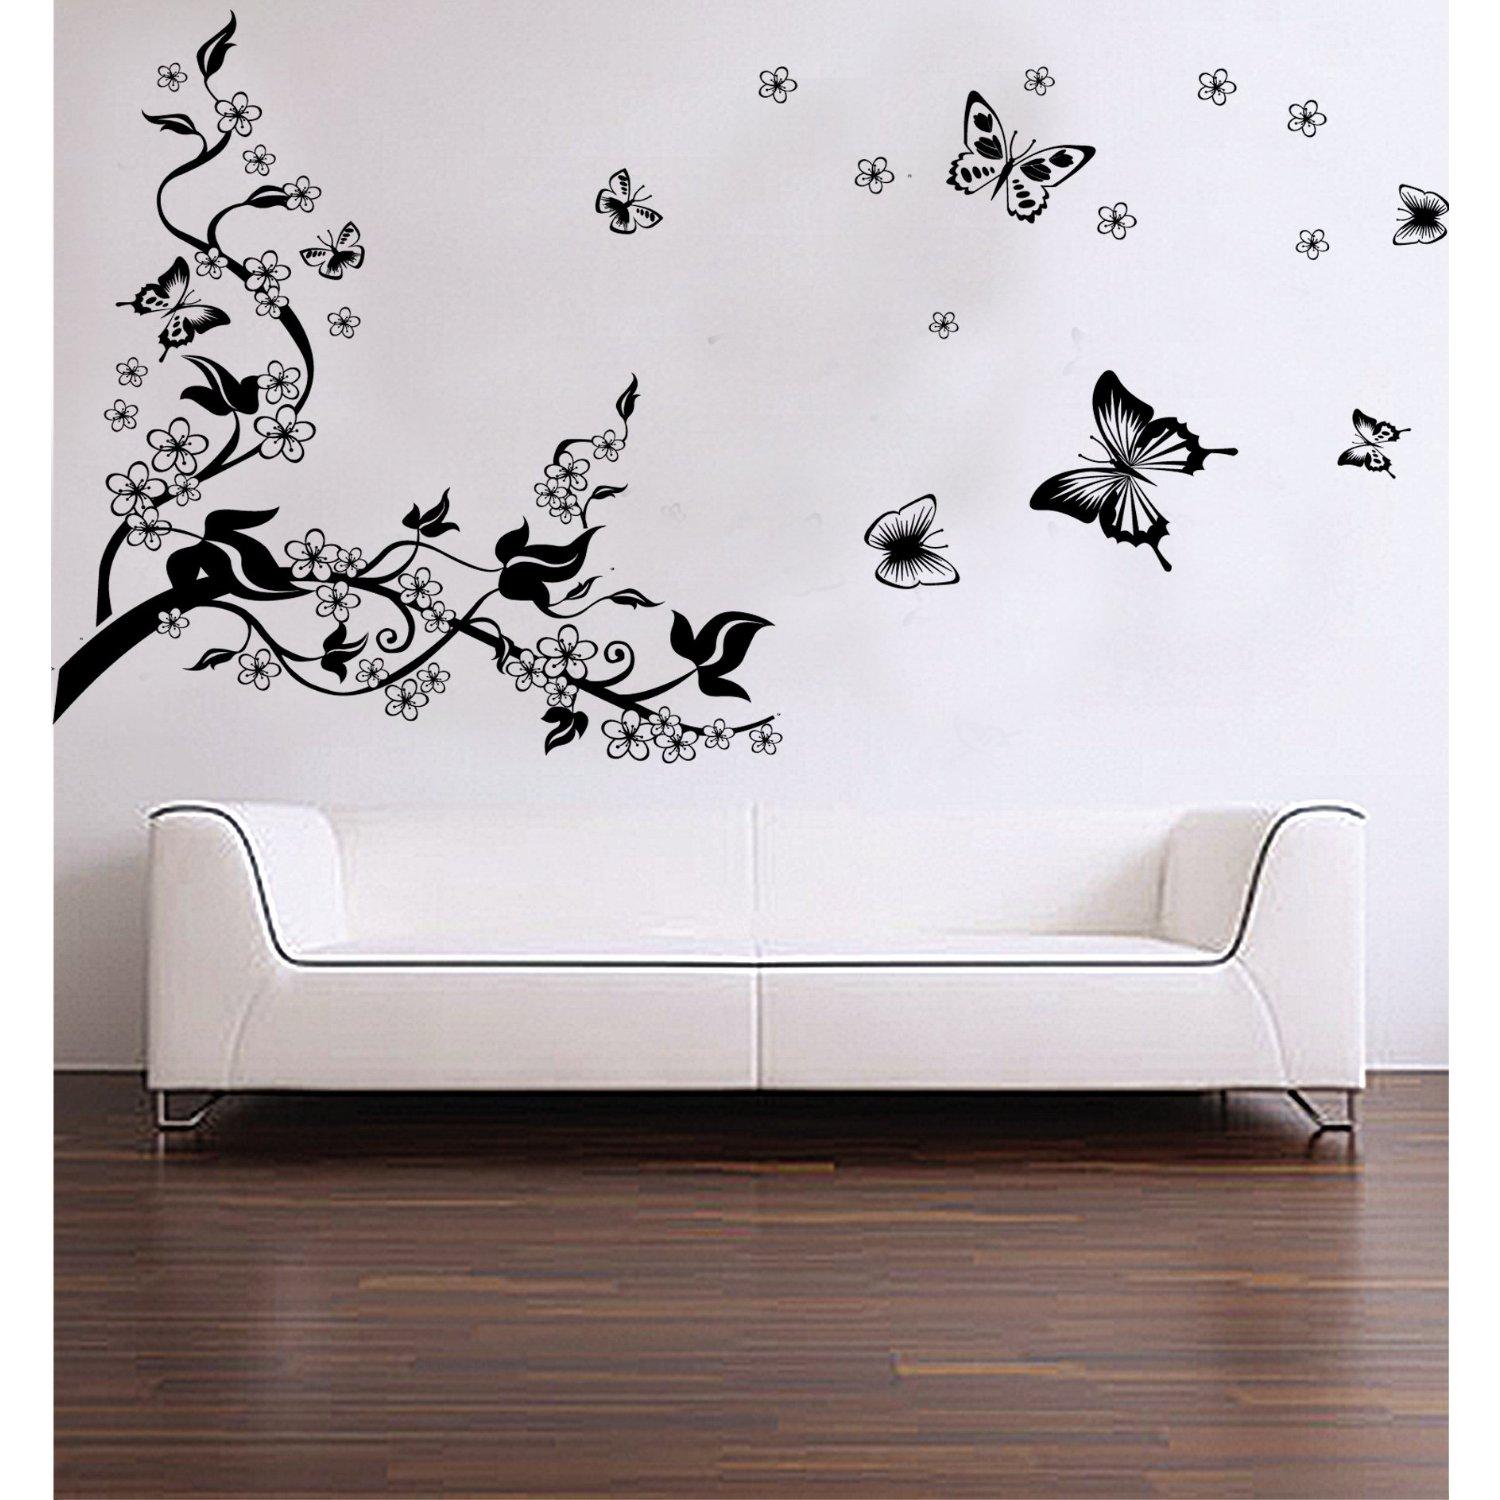  47 Wallpaper  and Decals  on WallpaperSafari